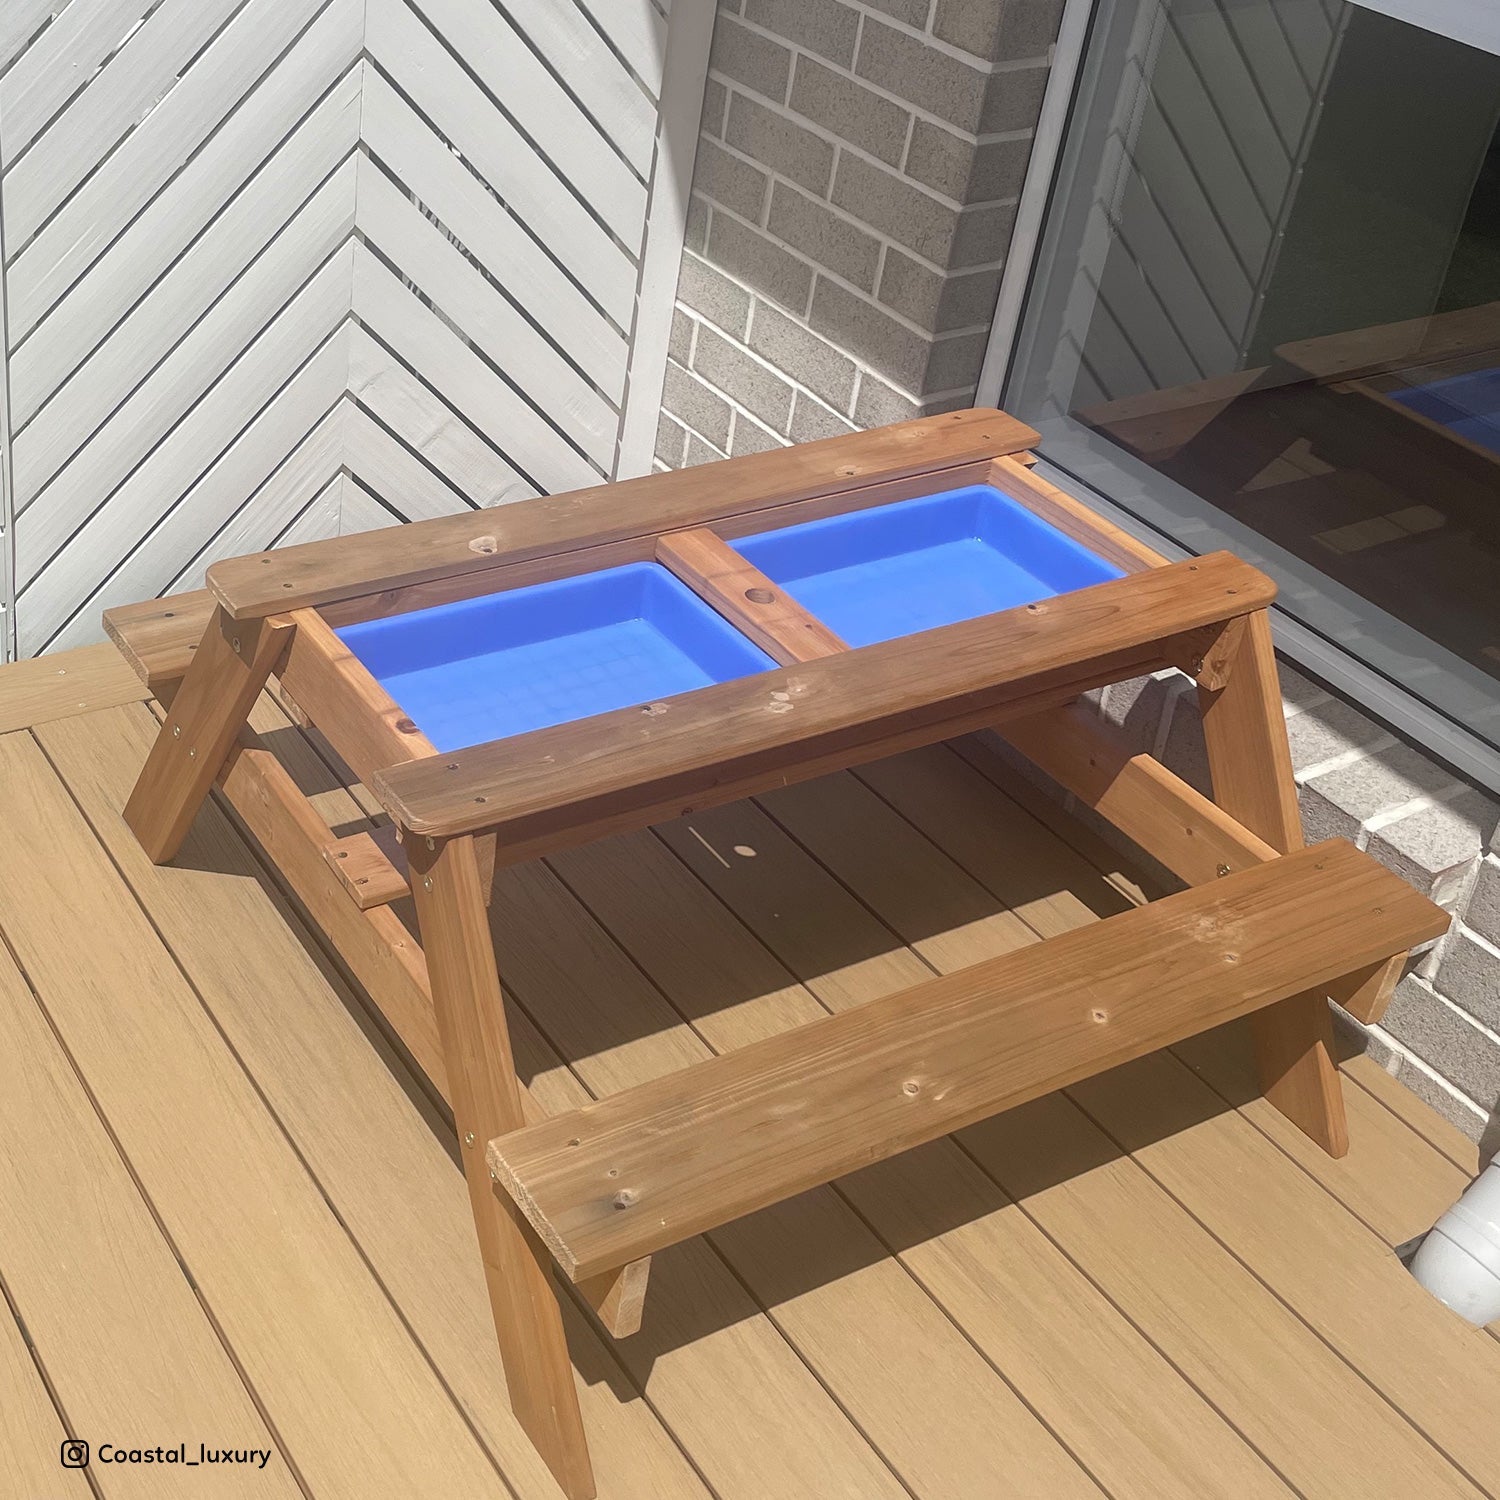 Sunrise Sand and Water Table with Umbrella - Kids Mega Mart